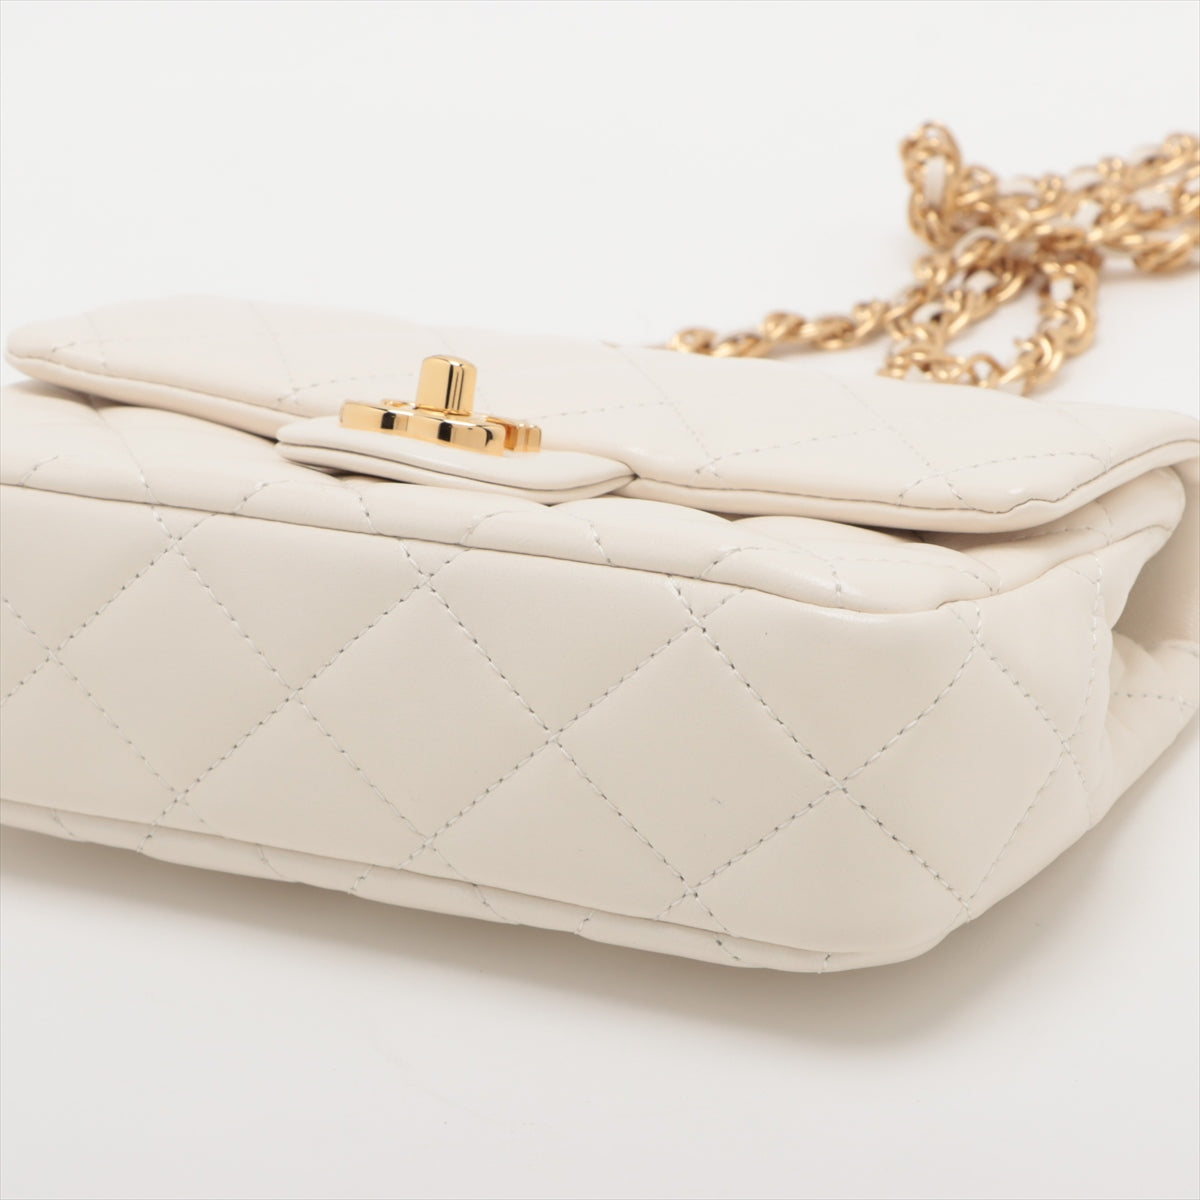 Chanel Matelasse Lambskin 2 Way Shoulder Bag Top Handle Beige Gold Metal Fittings